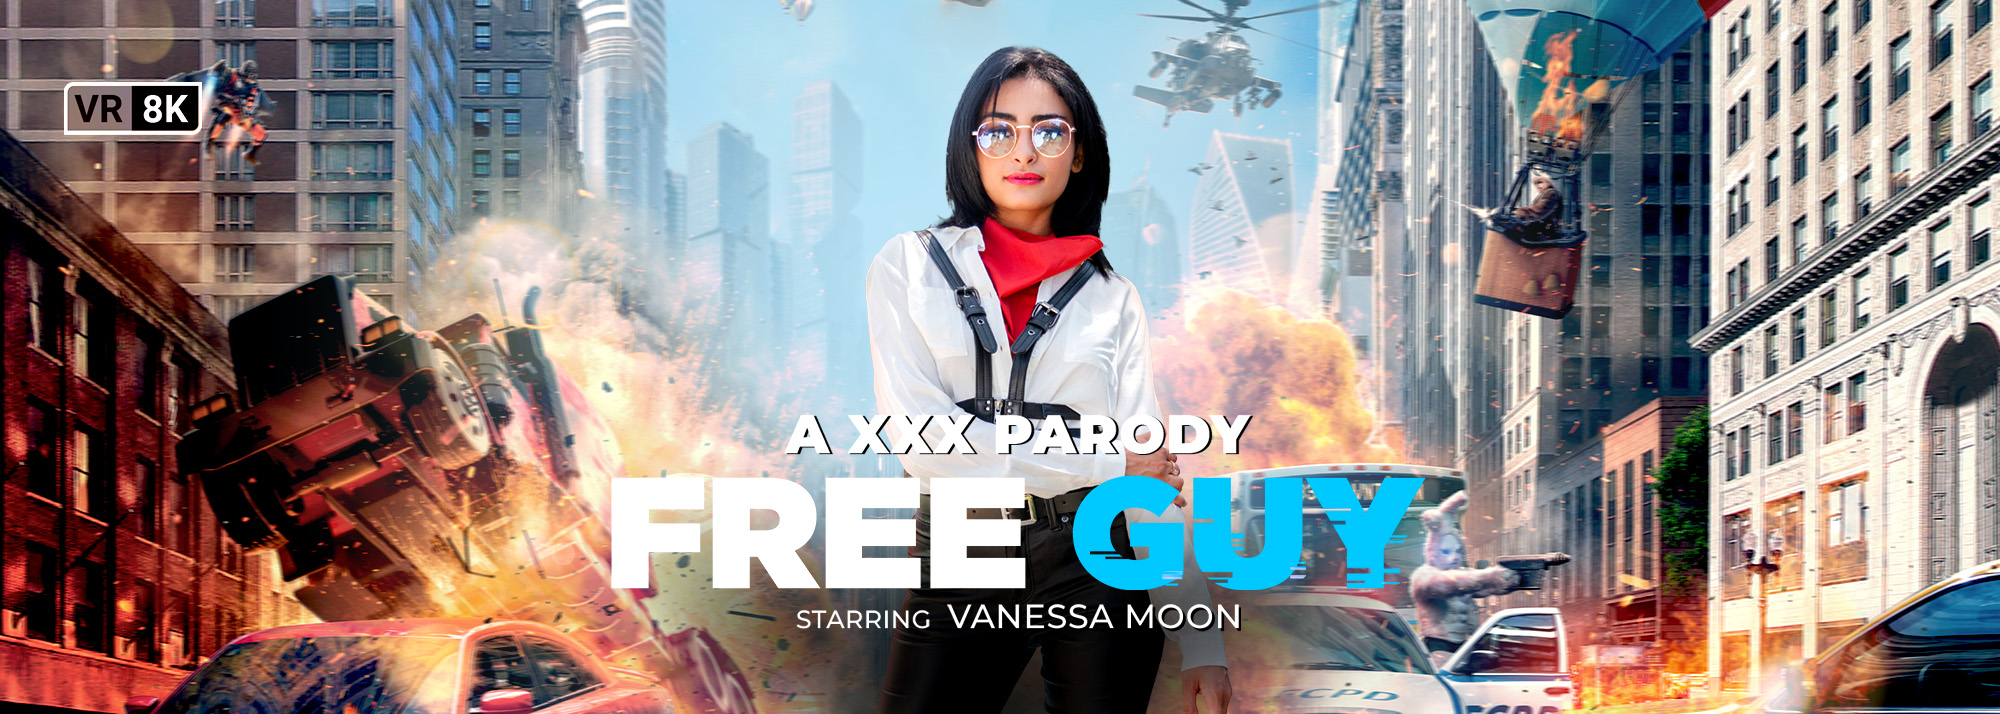 Free Guy (A XXX Parody) - VR Porn Video, Starring: Vanessa Moon VR